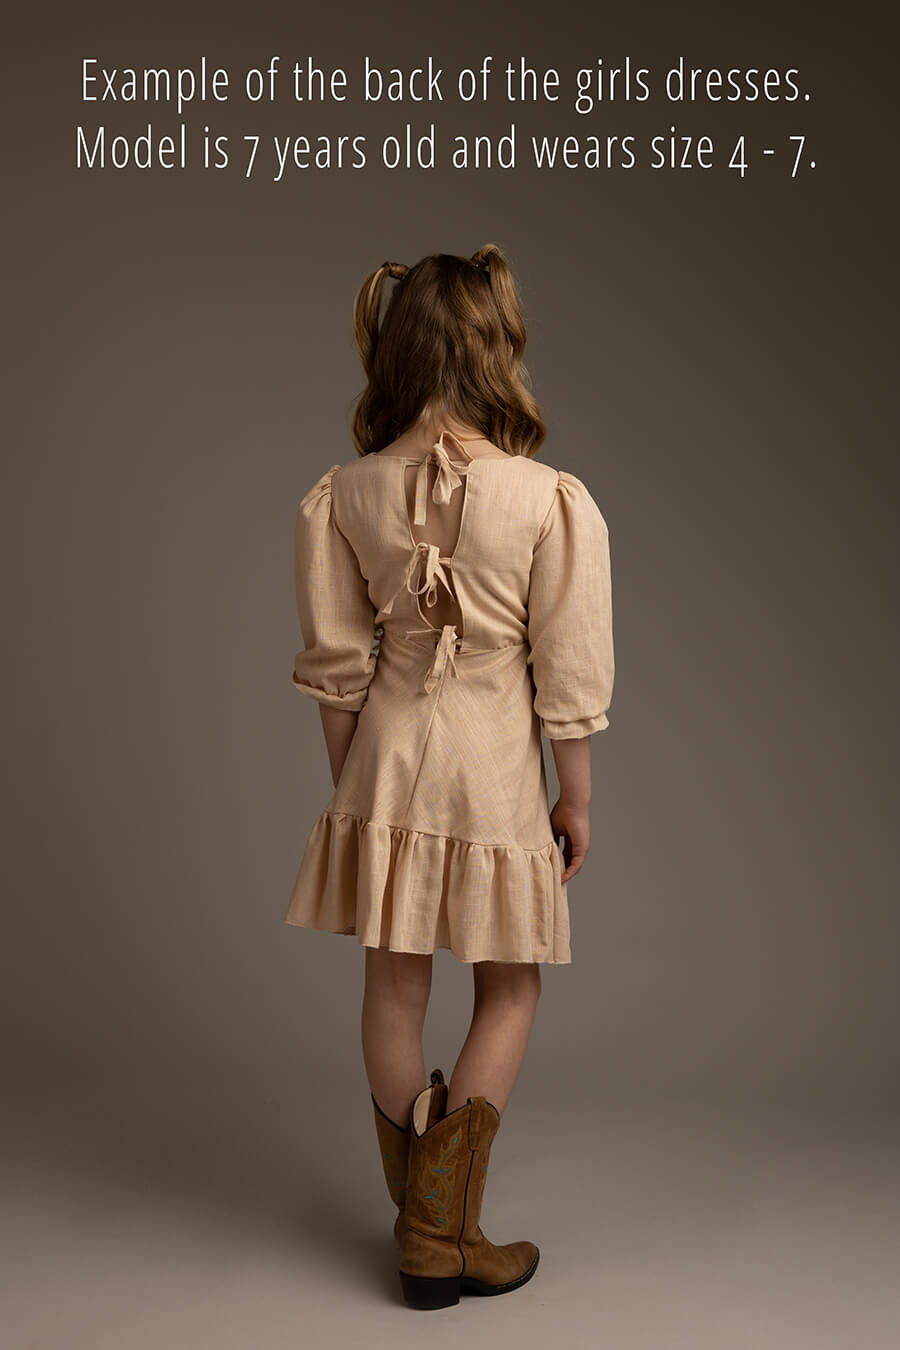 StylesILove Lovely Sequin Flower Girl Dress, 5 Colors (6-7 Years, Pink) -  Walmart.com